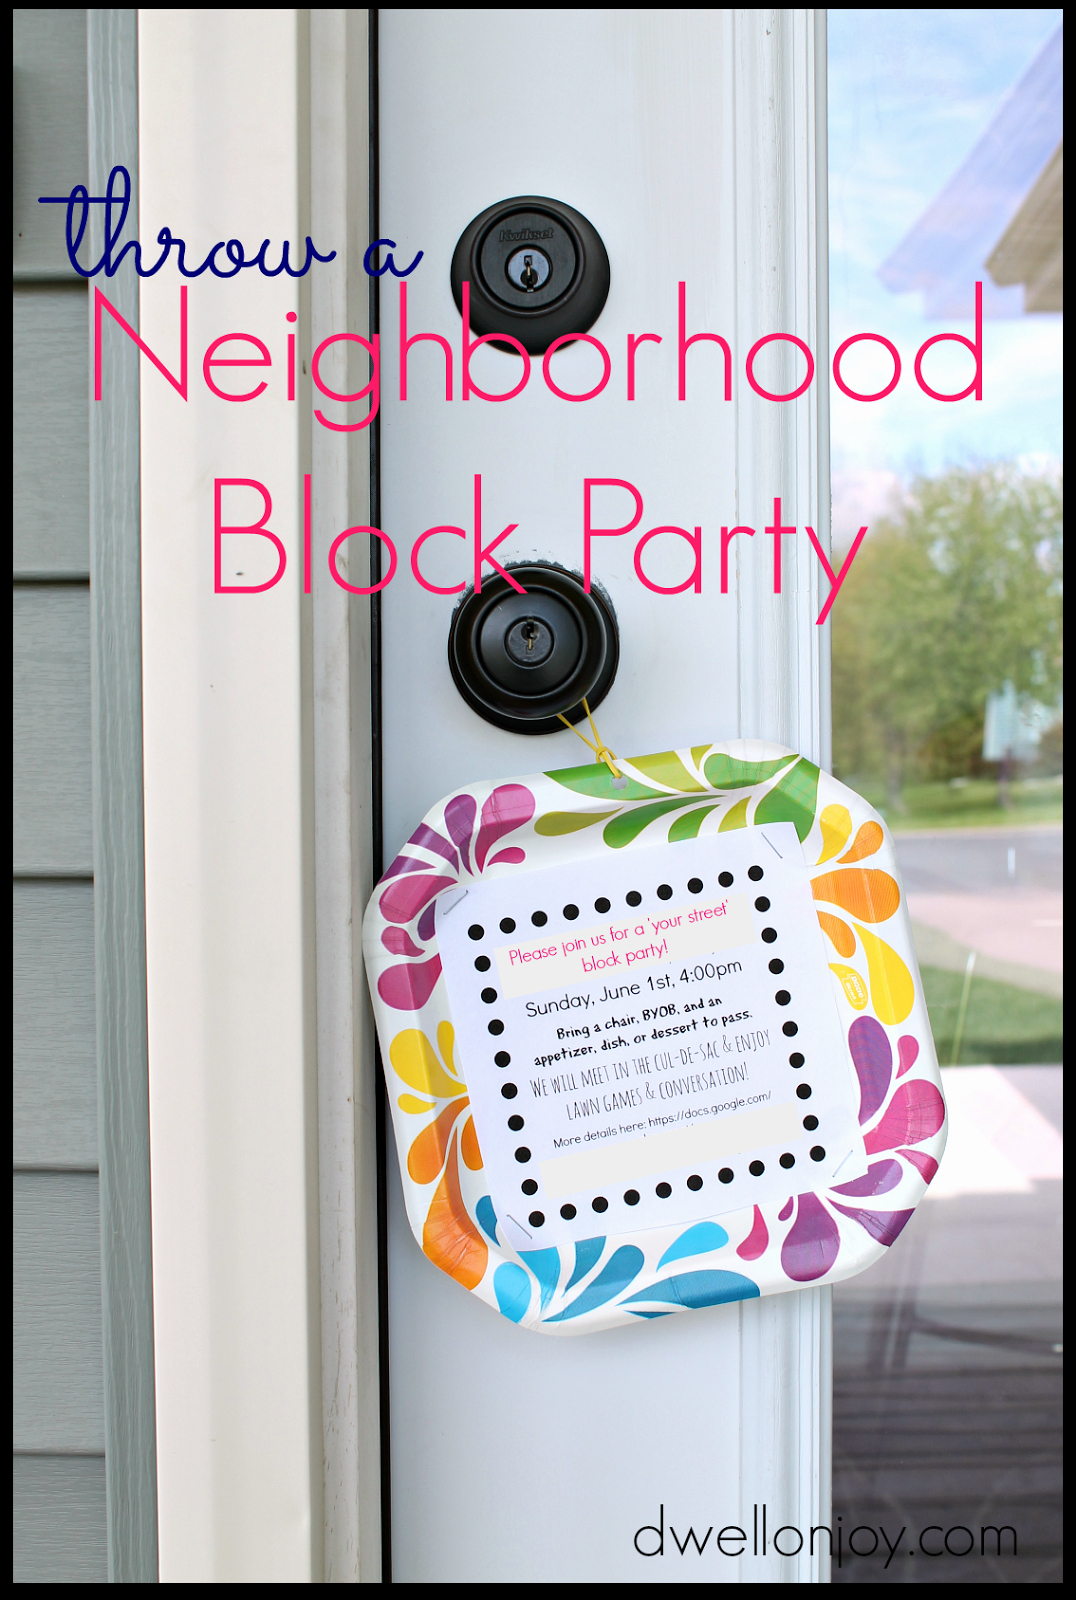 Block Party Invitation Template Luxury Neighborhood Block Party Invitation Templet